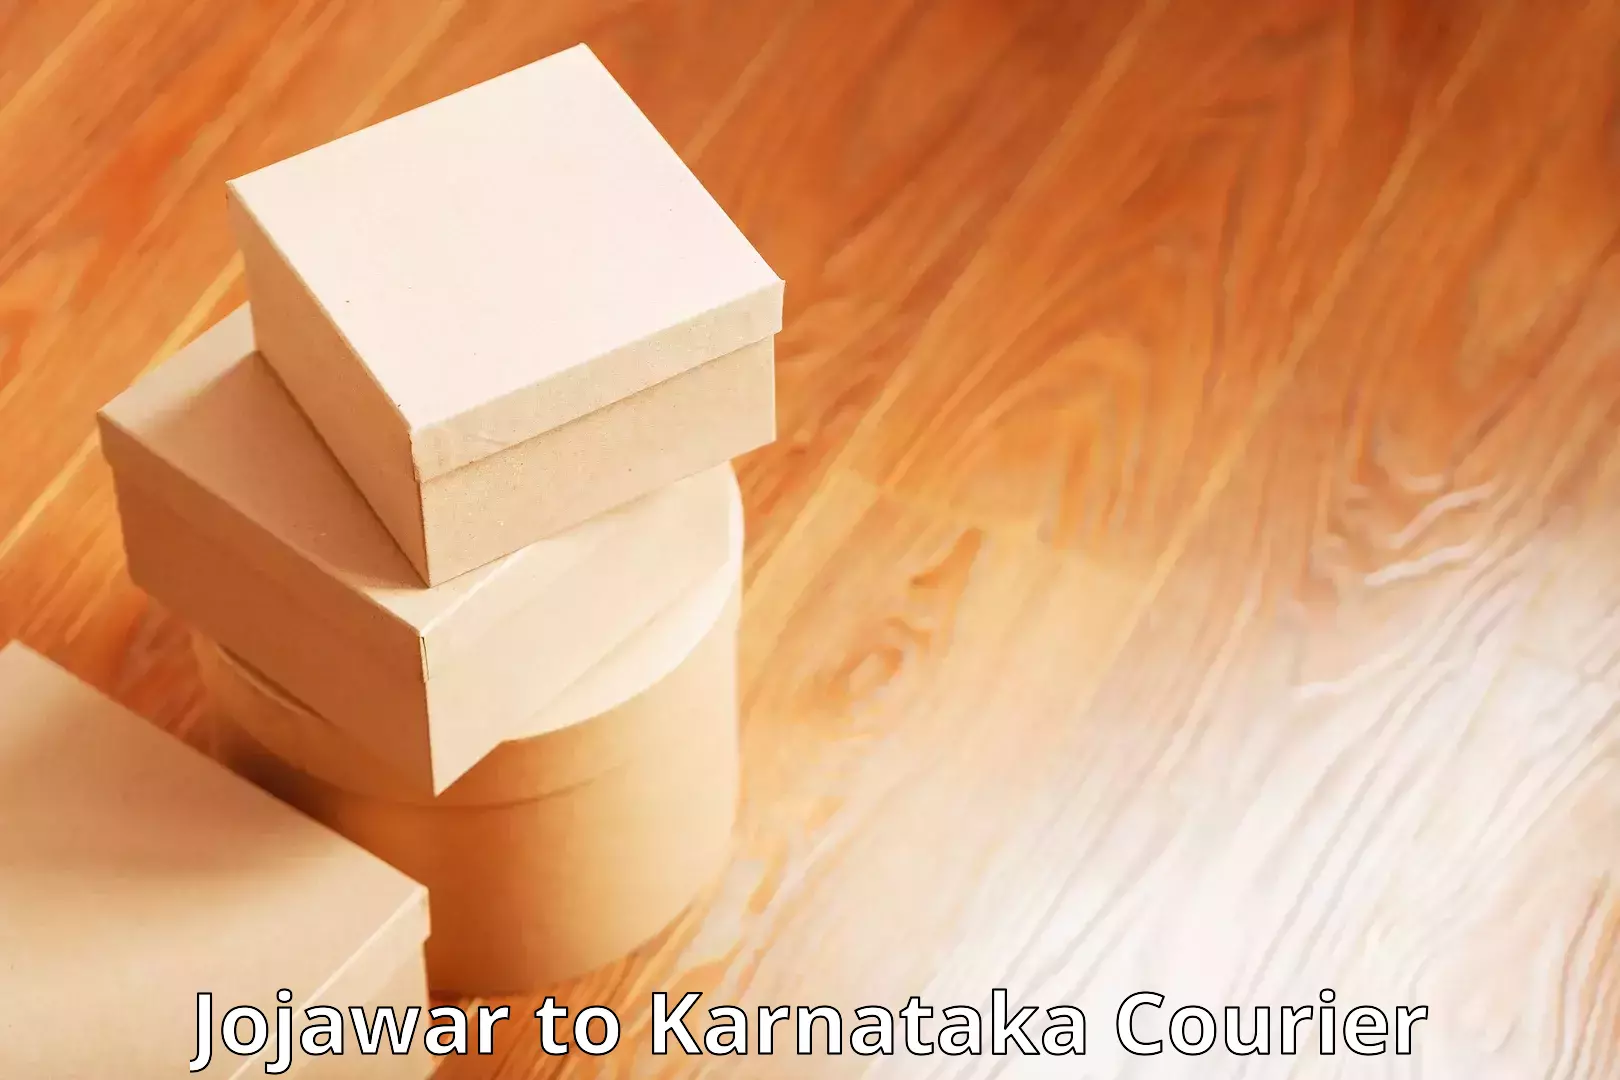 Flexible delivery scheduling in Jojawar to Karnataka